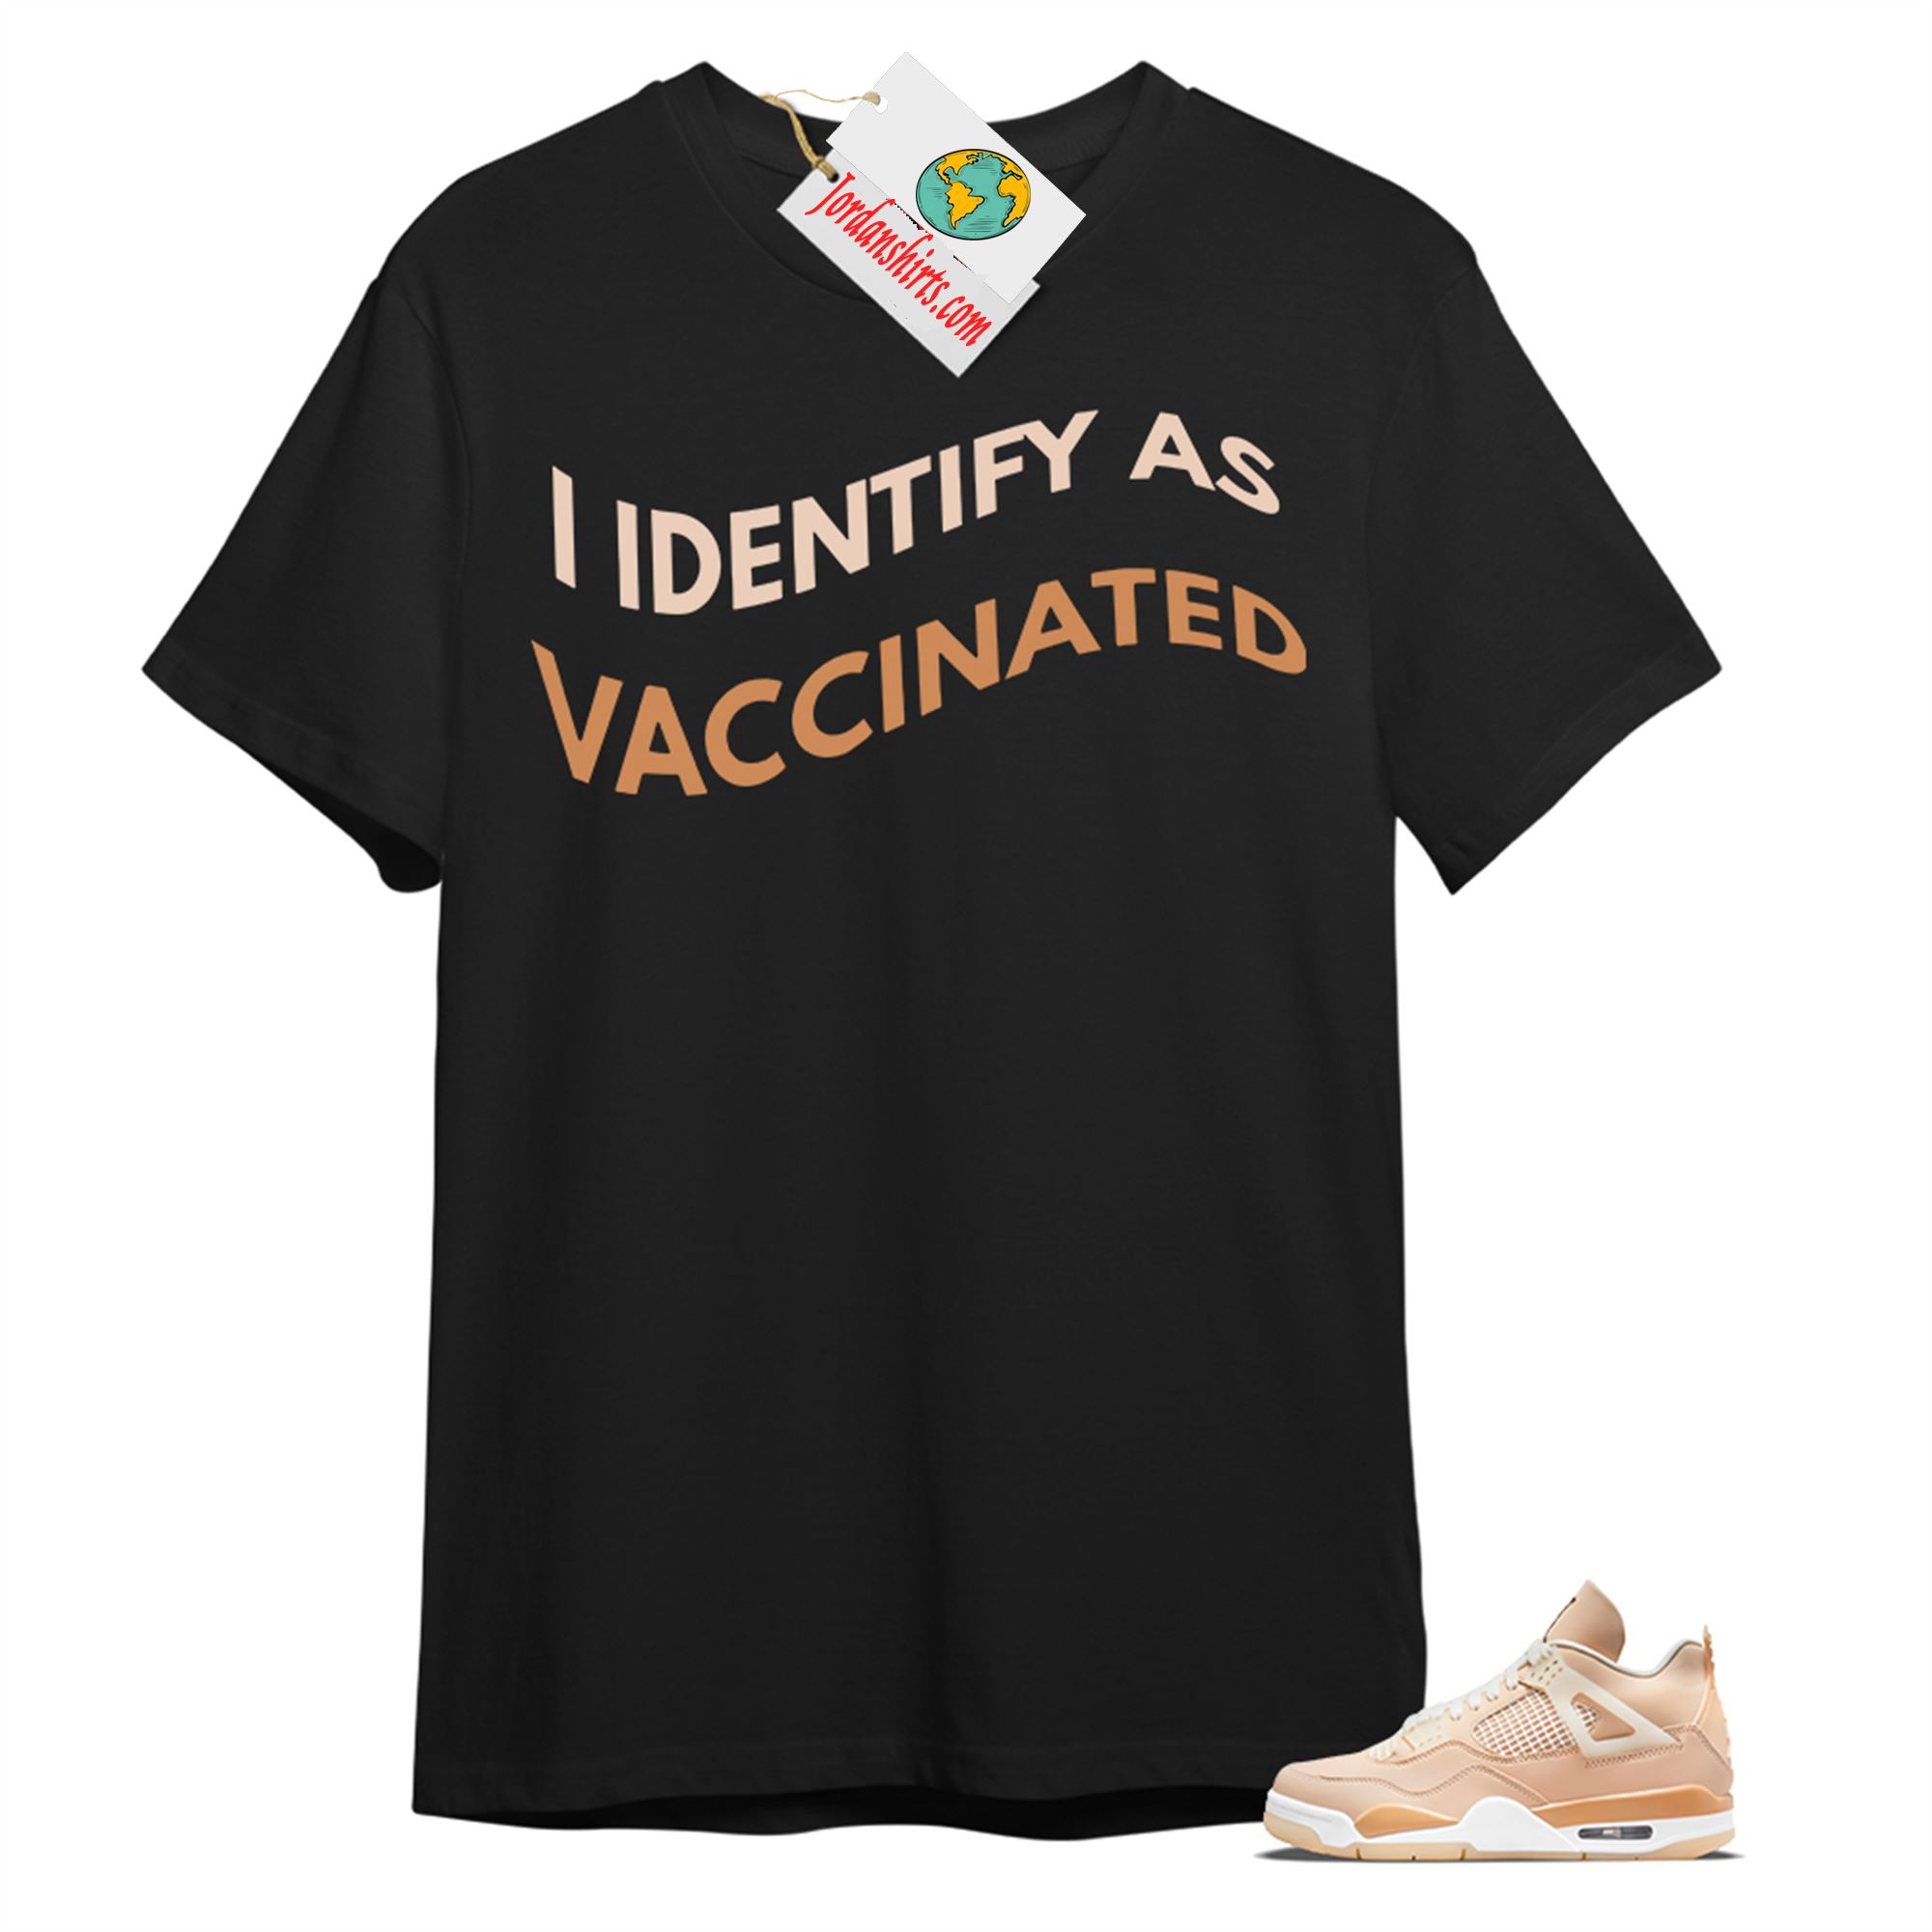 Jordan 4 Shirt, I Identify As Vaccinated Black T-shirt Air Jordan 4 Shimmer 4s Size Up To 5xl